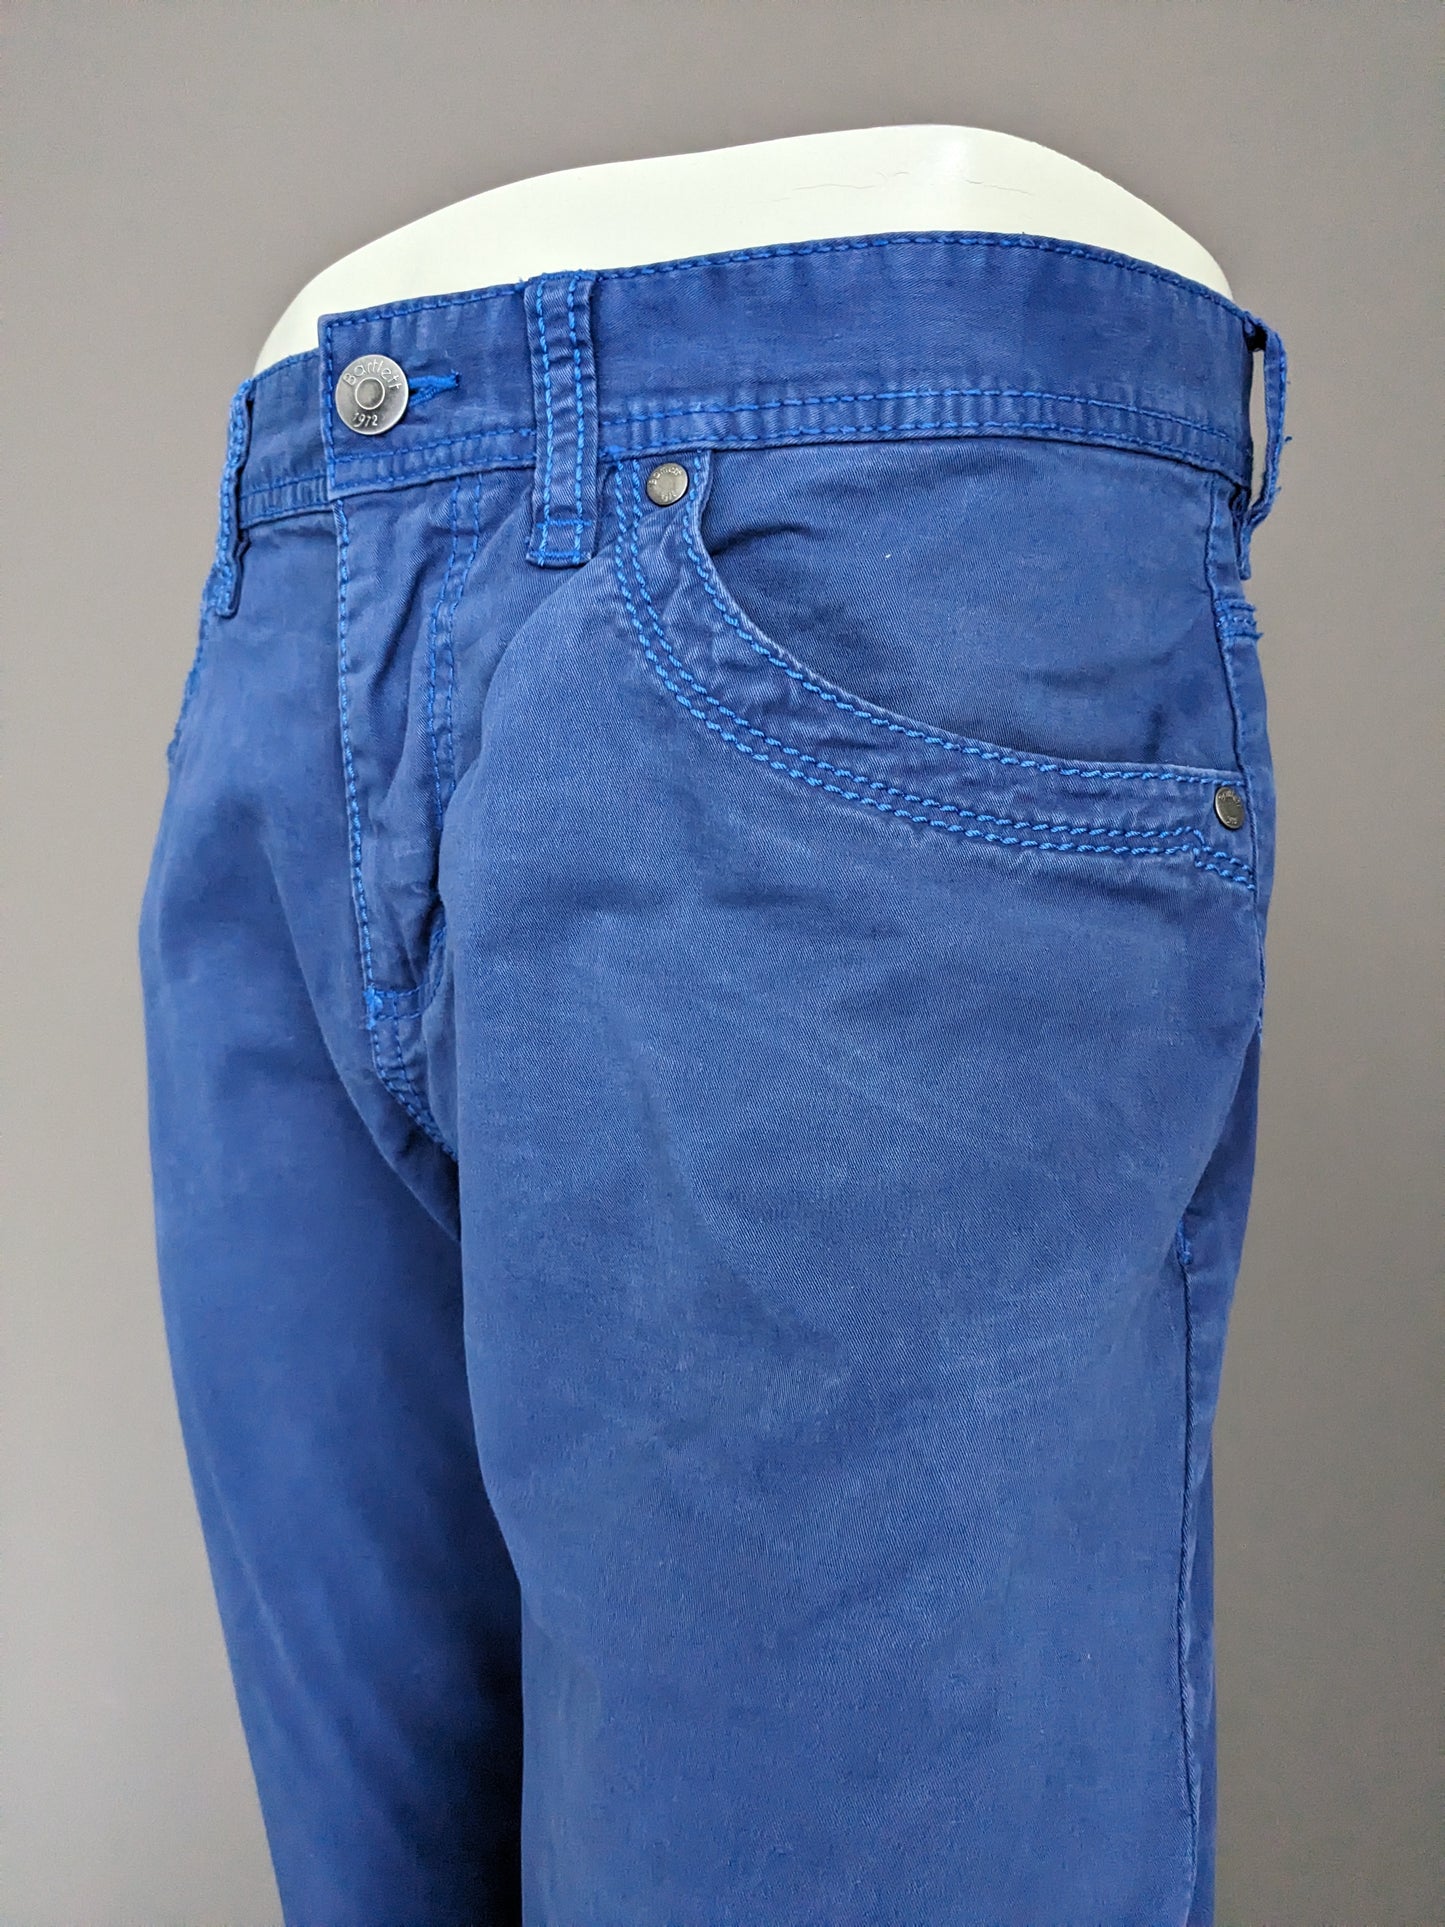 Bartlett broek / pantalon. Blauw. Maat 24 (48) / M